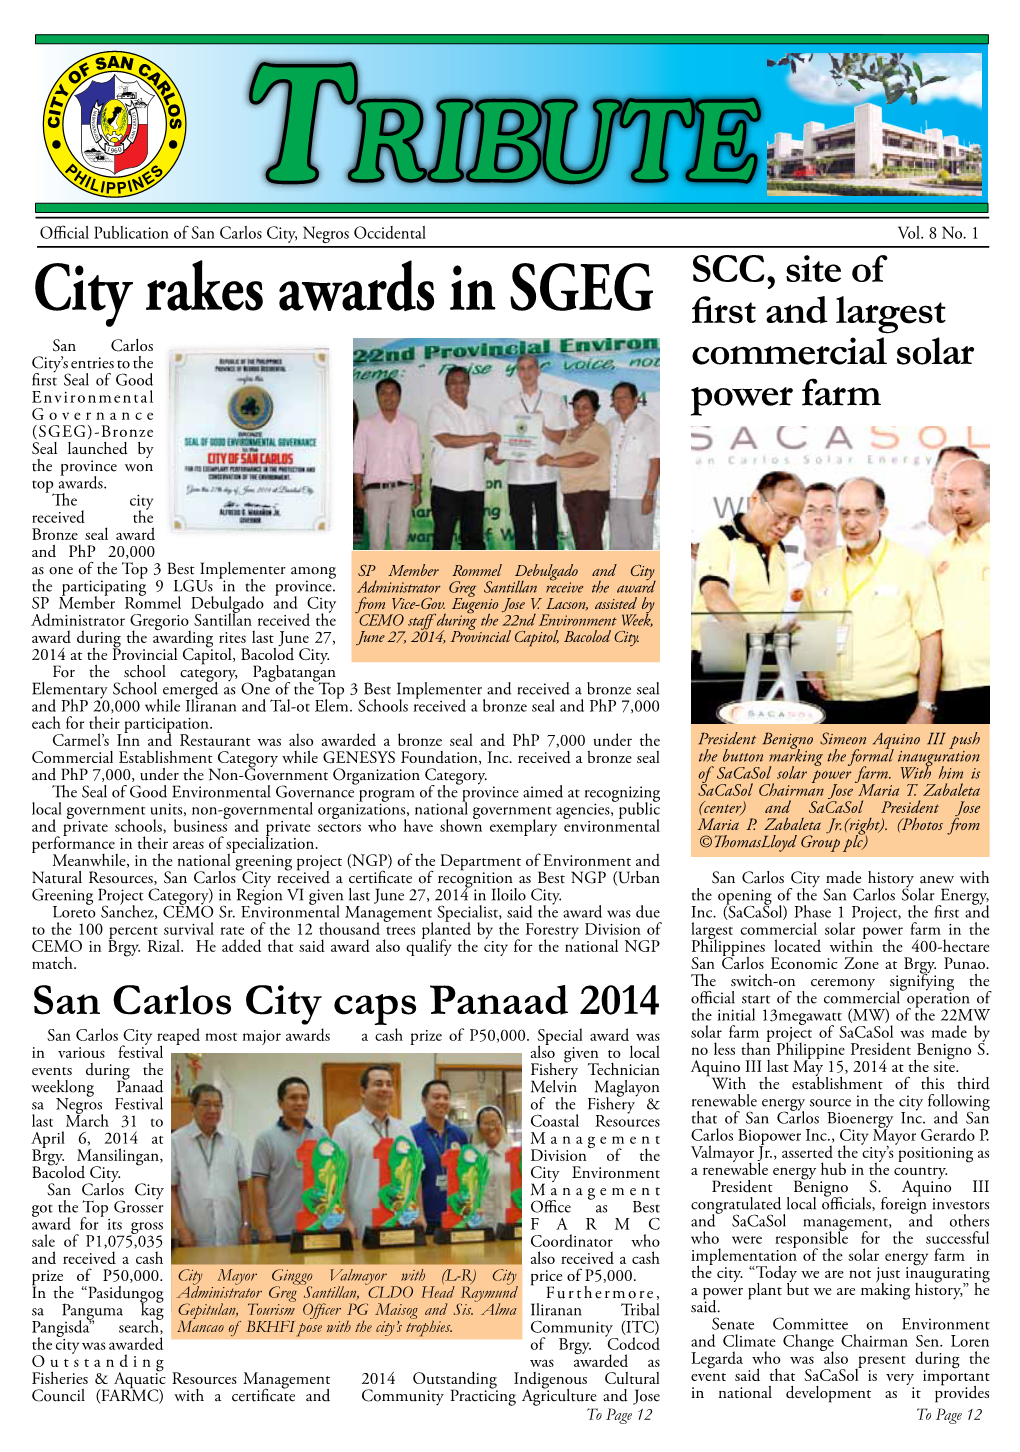 City Rakes Awards in SGEG